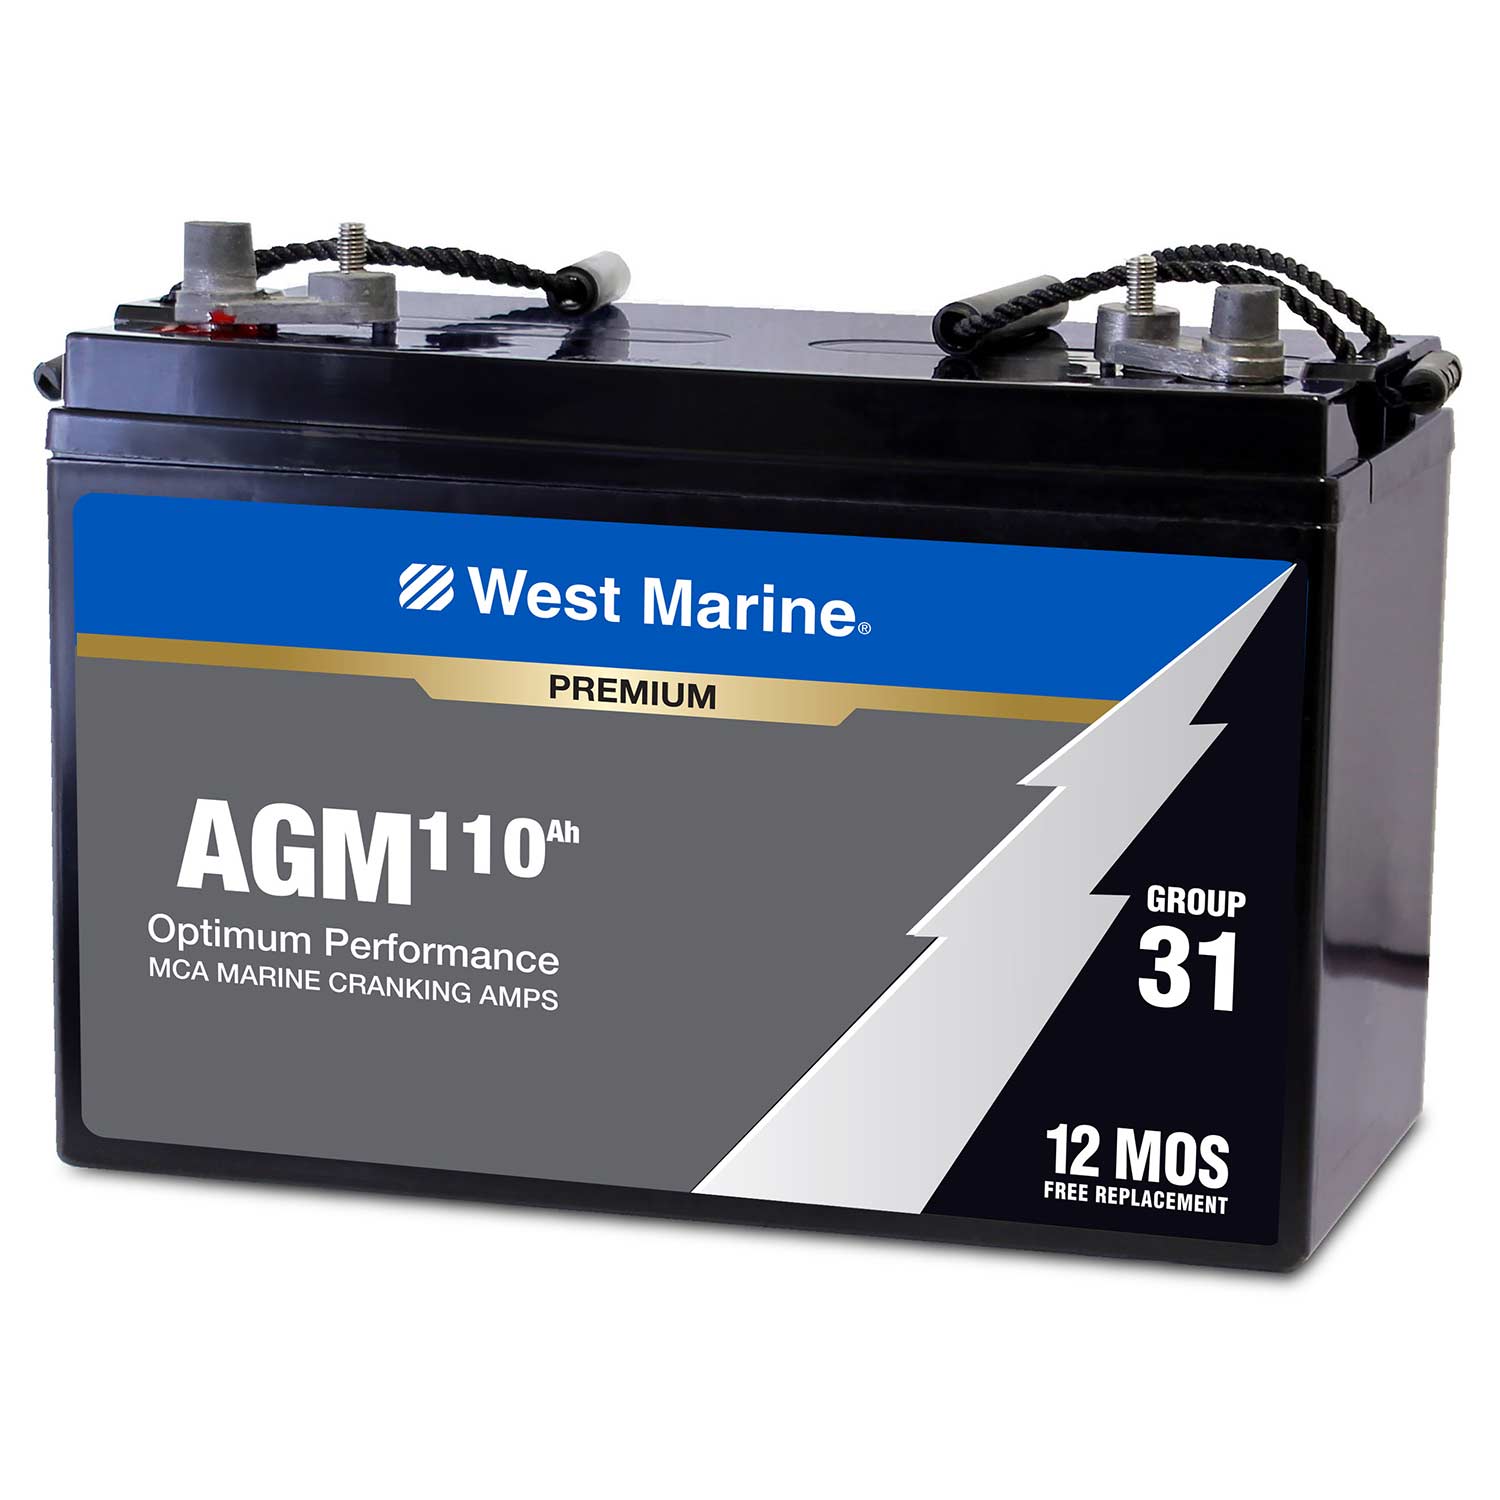 Batterie marine calcium Dual service et démarrage 12v 110ah FREEDOM MARINE  - Battery Center